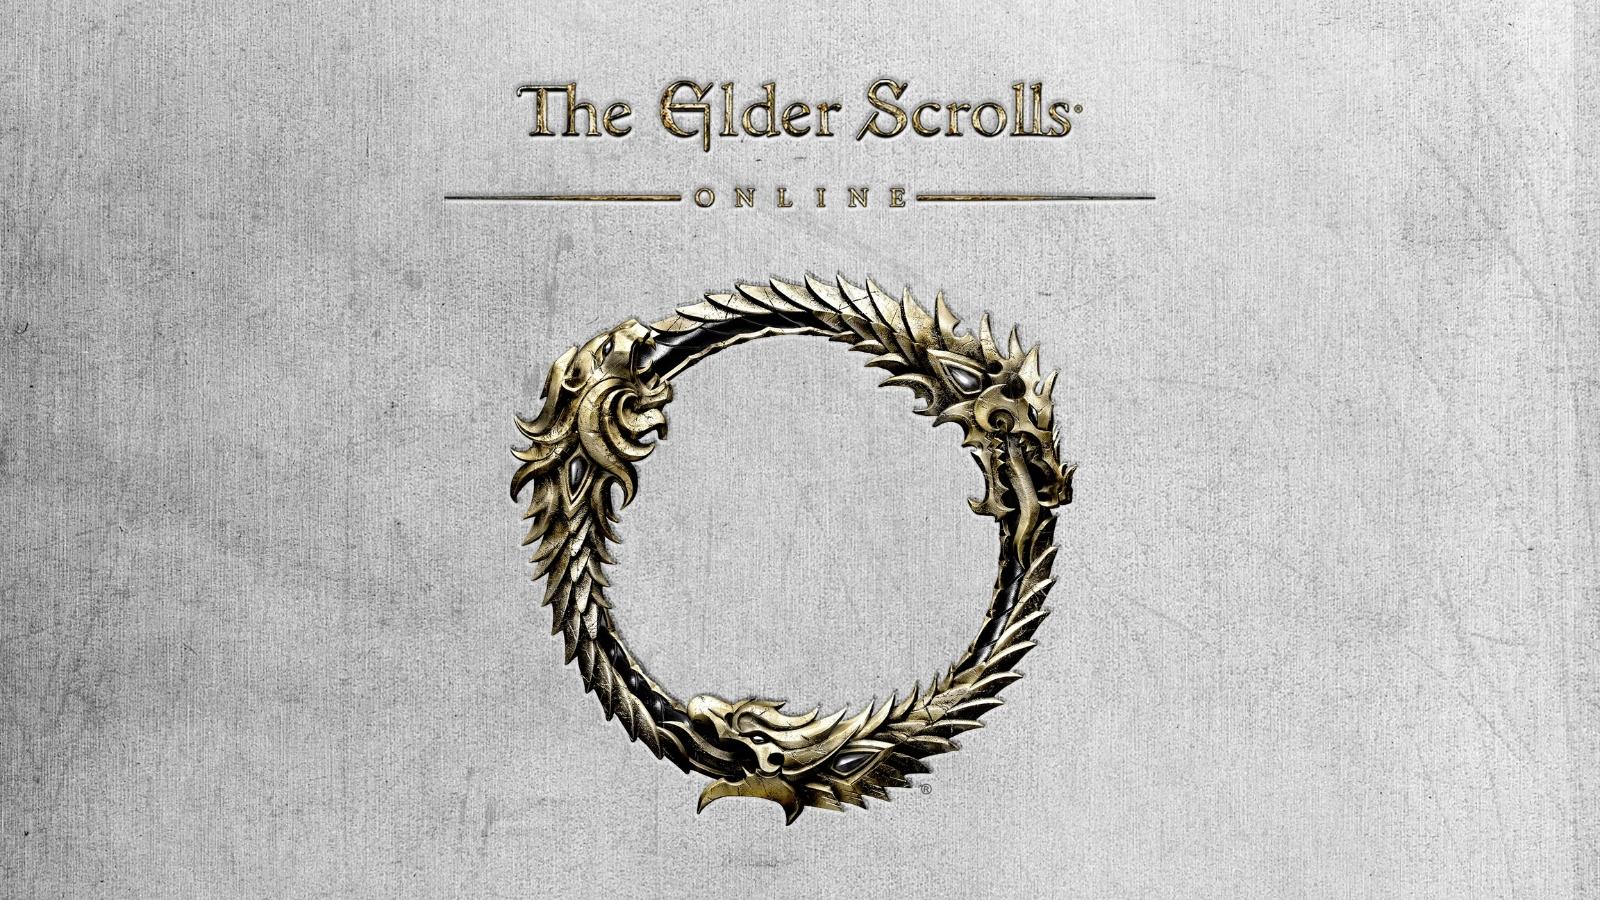 Work Together to Unlock Special Rewards During Elder Scrolls